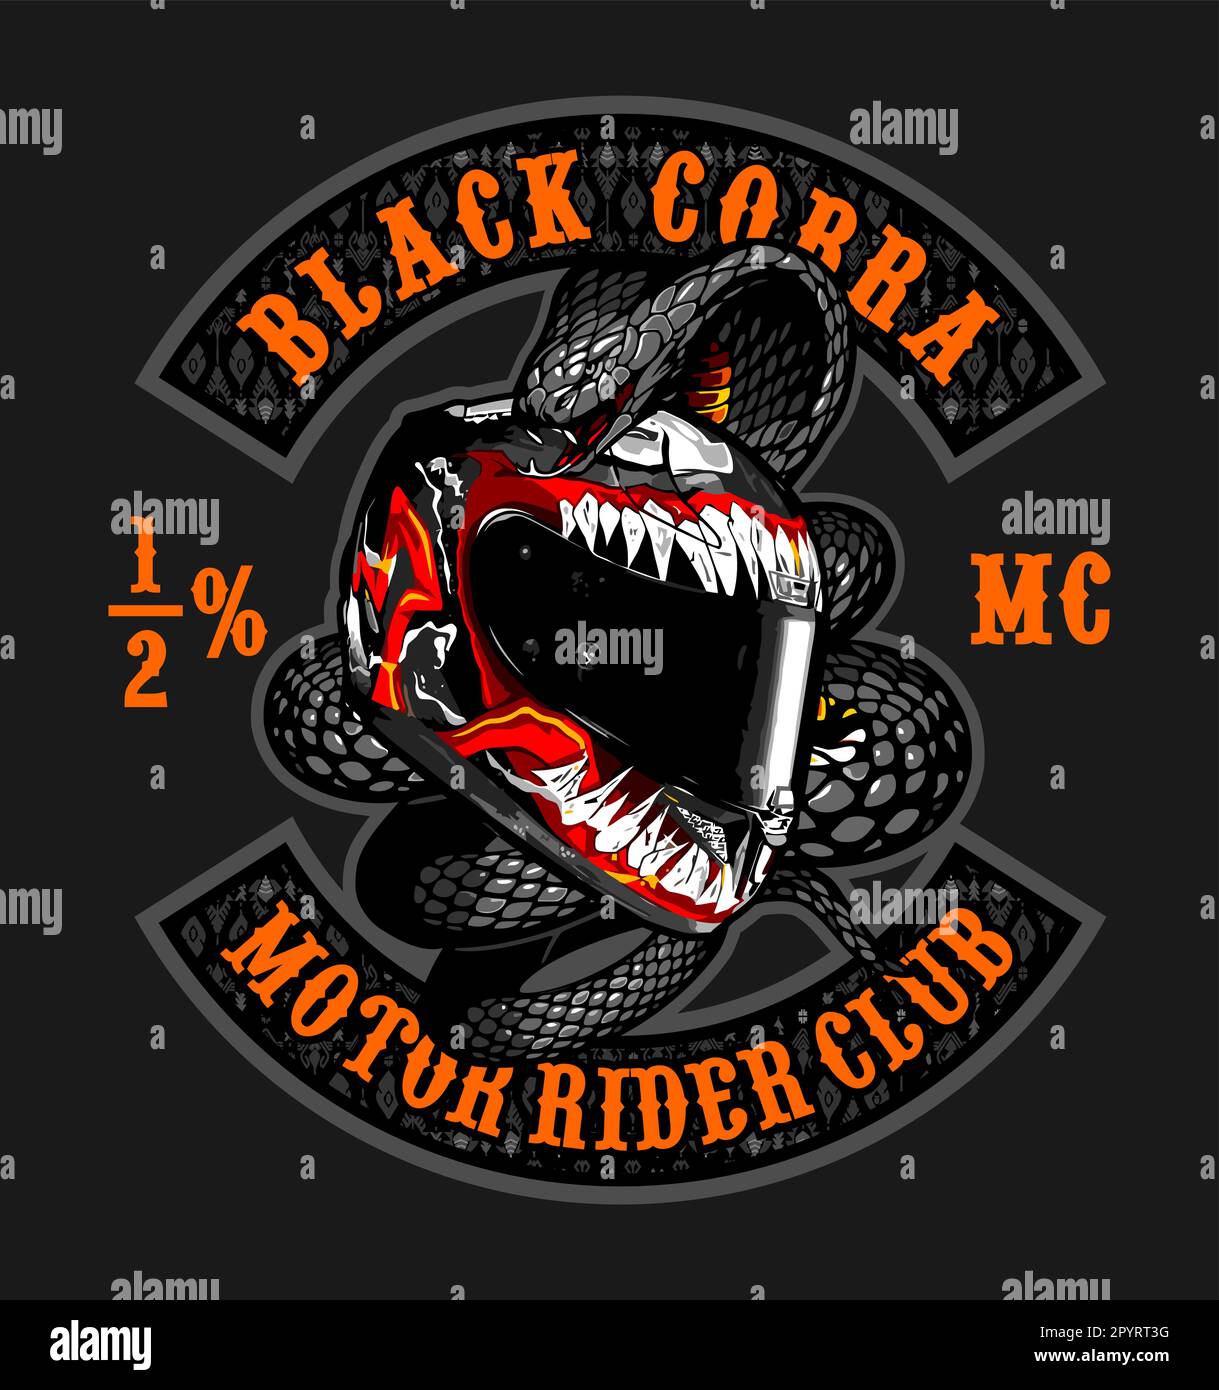 motorcycle club logo Stock Vector Image & Art - Alamy